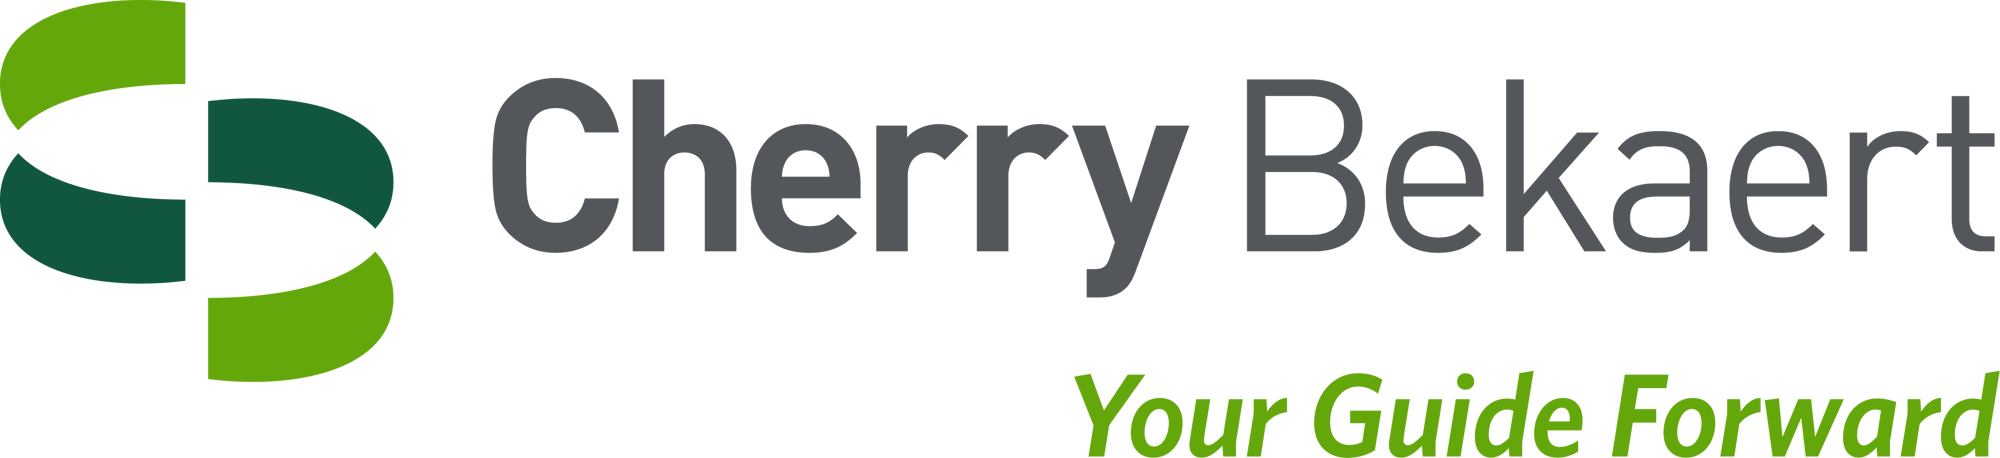 Cherry_Bekaert-Logo-Guide-Horizontal-RGB_300dpi